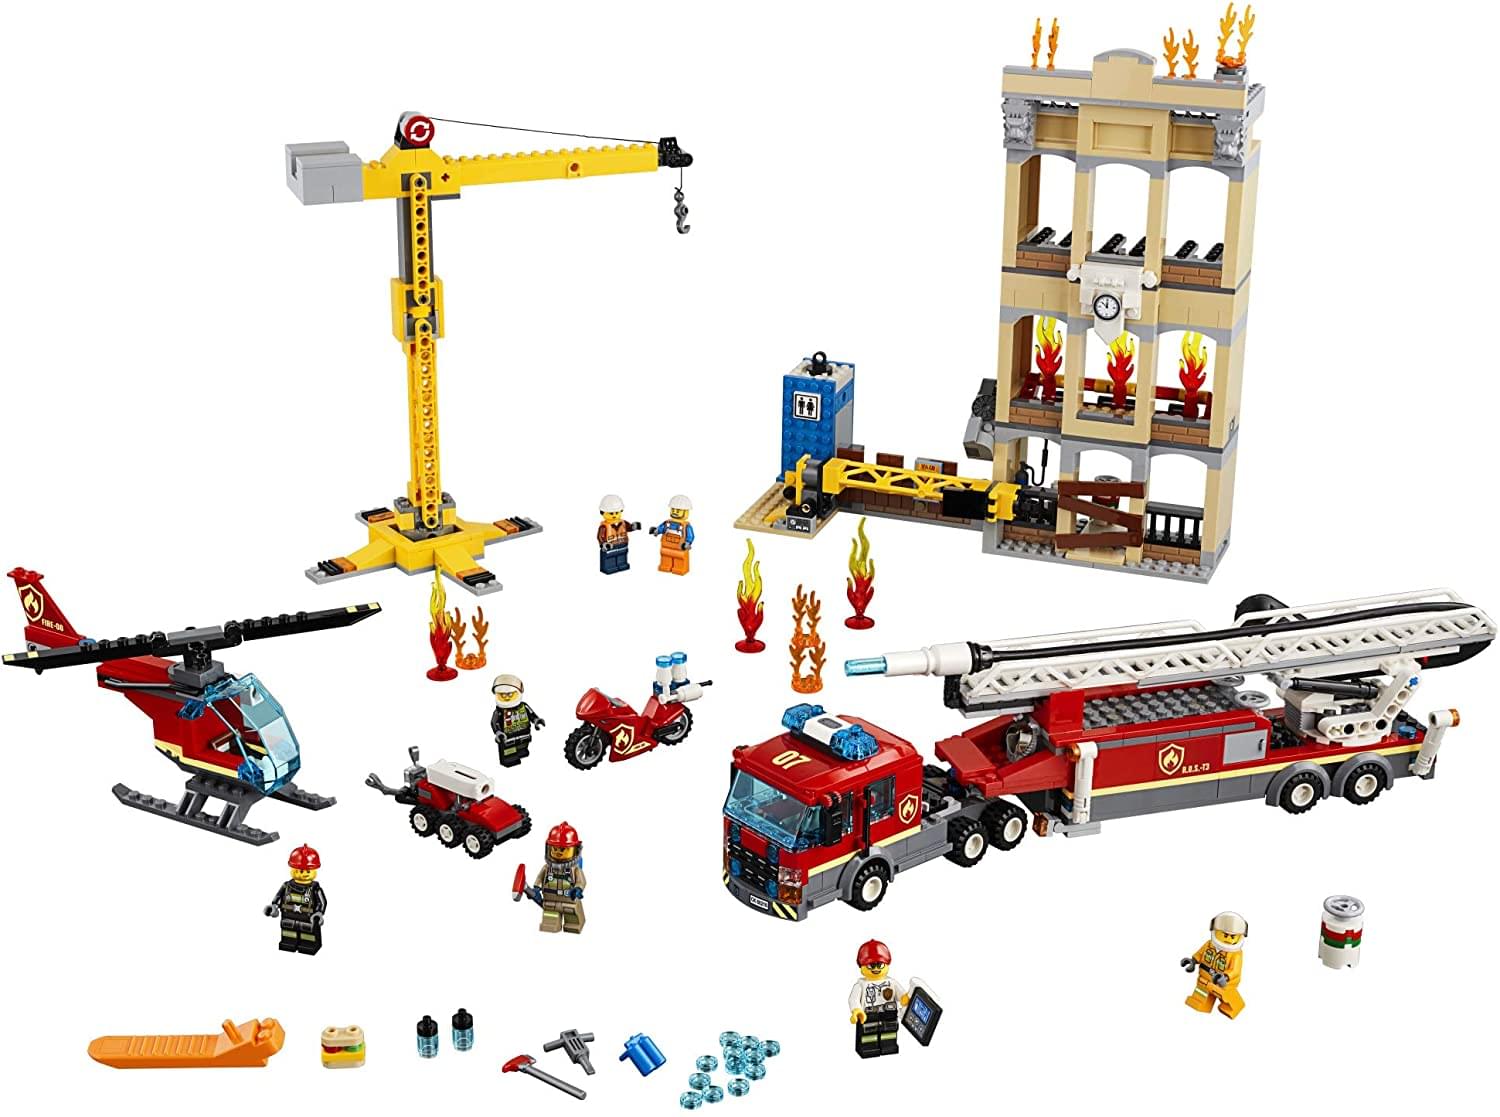 LEGO City 60216 Downtown Fire Brigade 943 Pieces Building Set